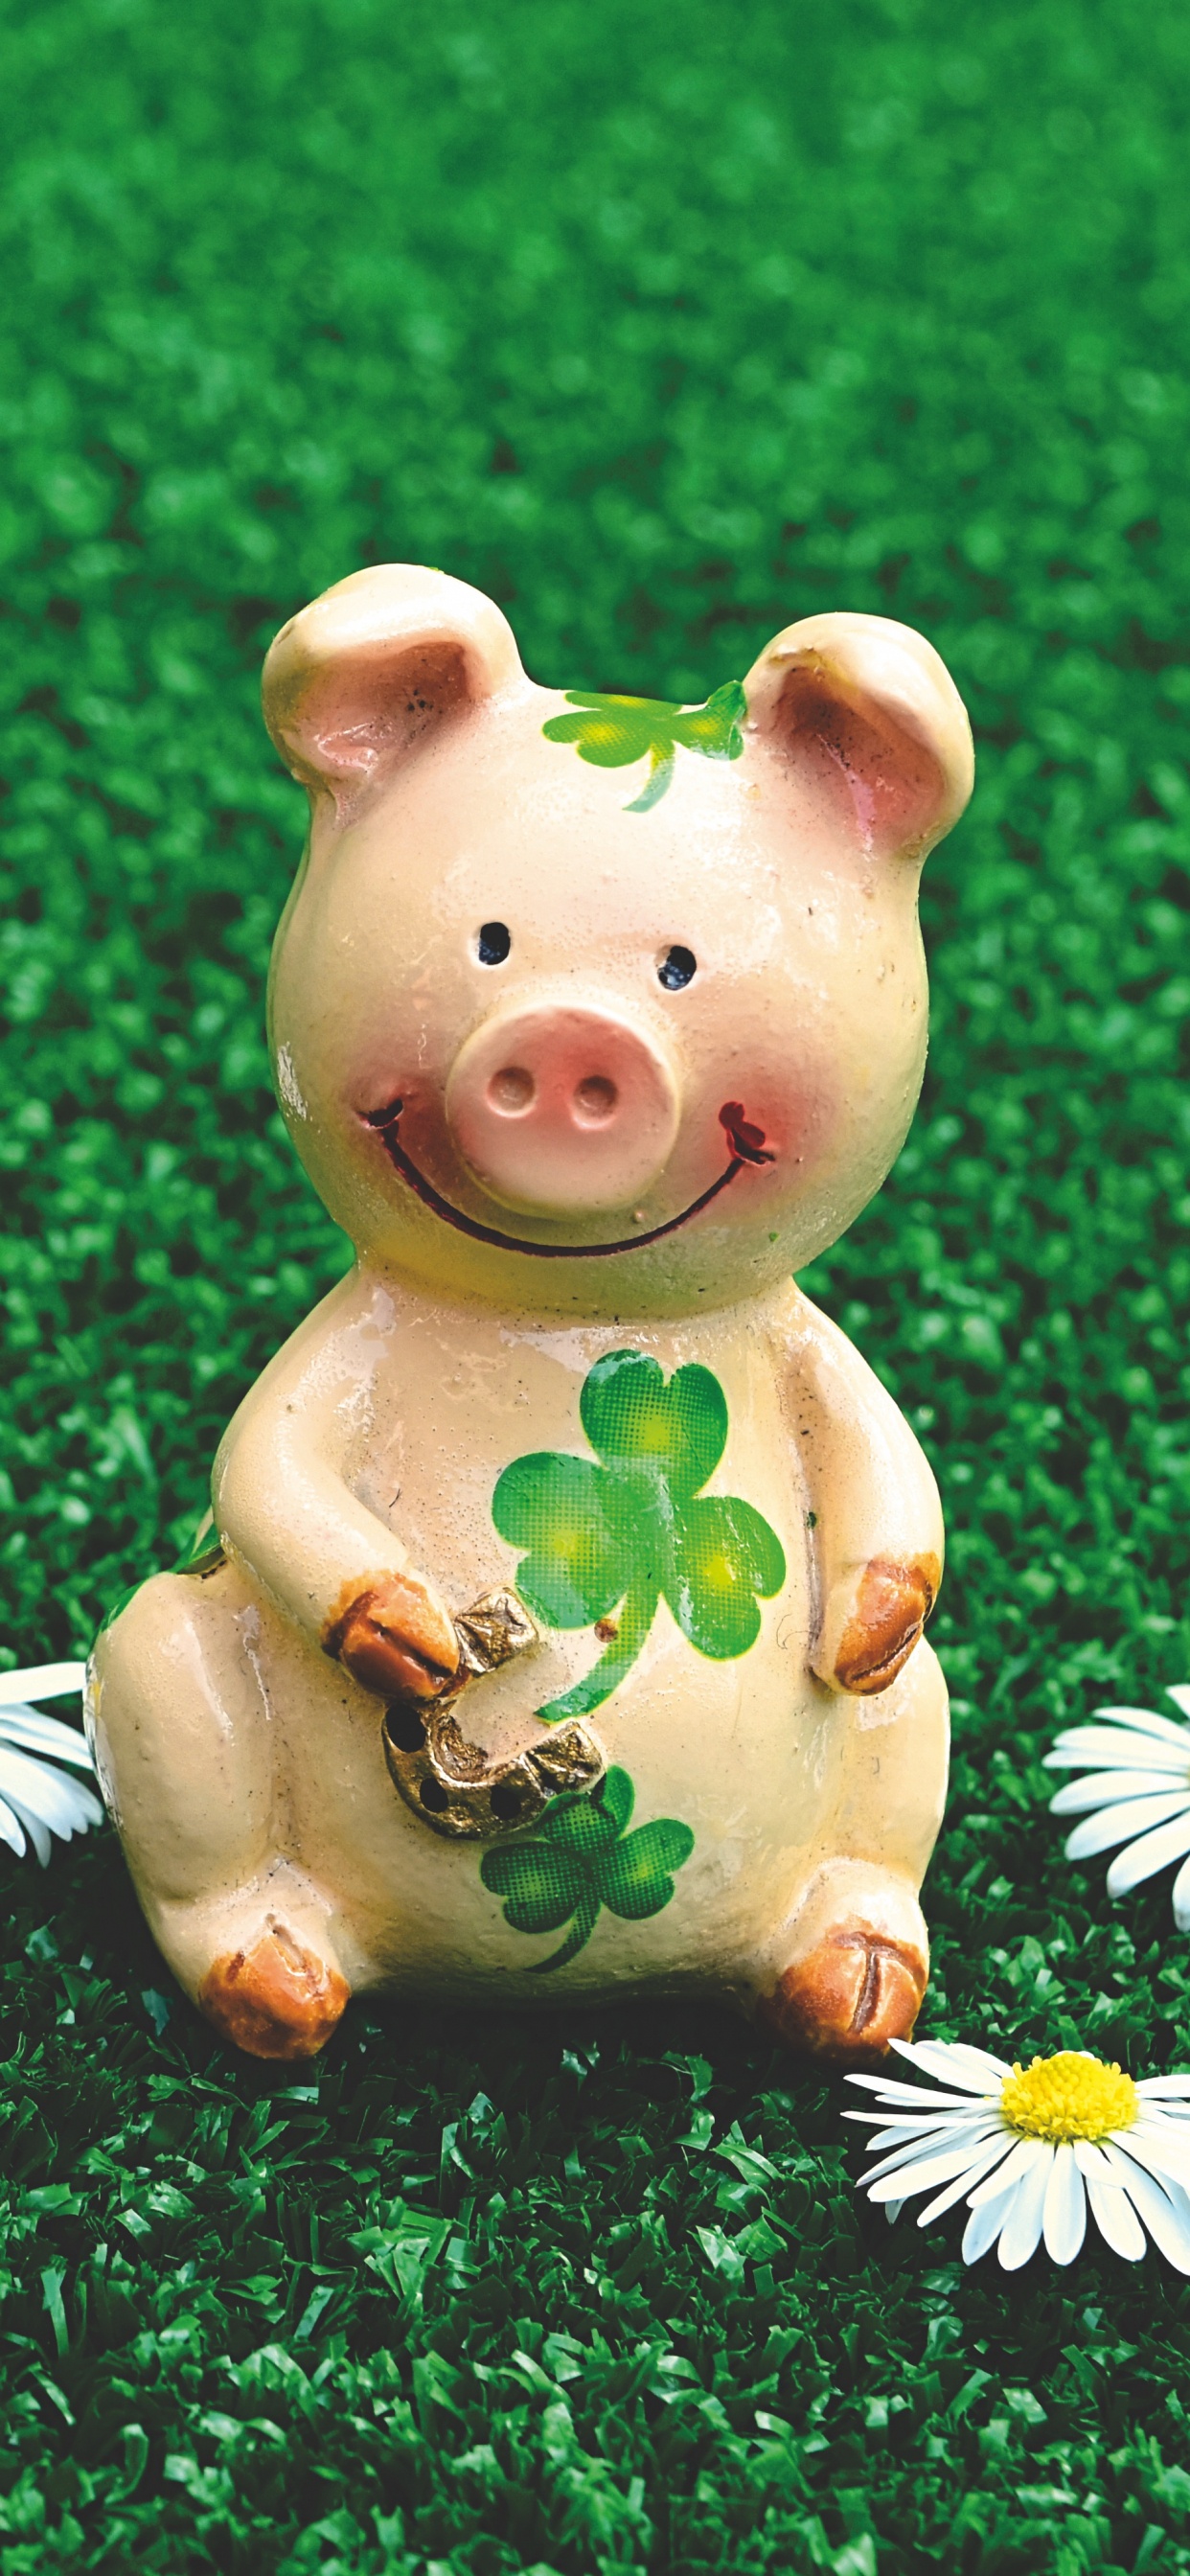 Pink Pig Ceramic Figurine on Green Grass Field. Wallpaper in 1242x2688 Resolution